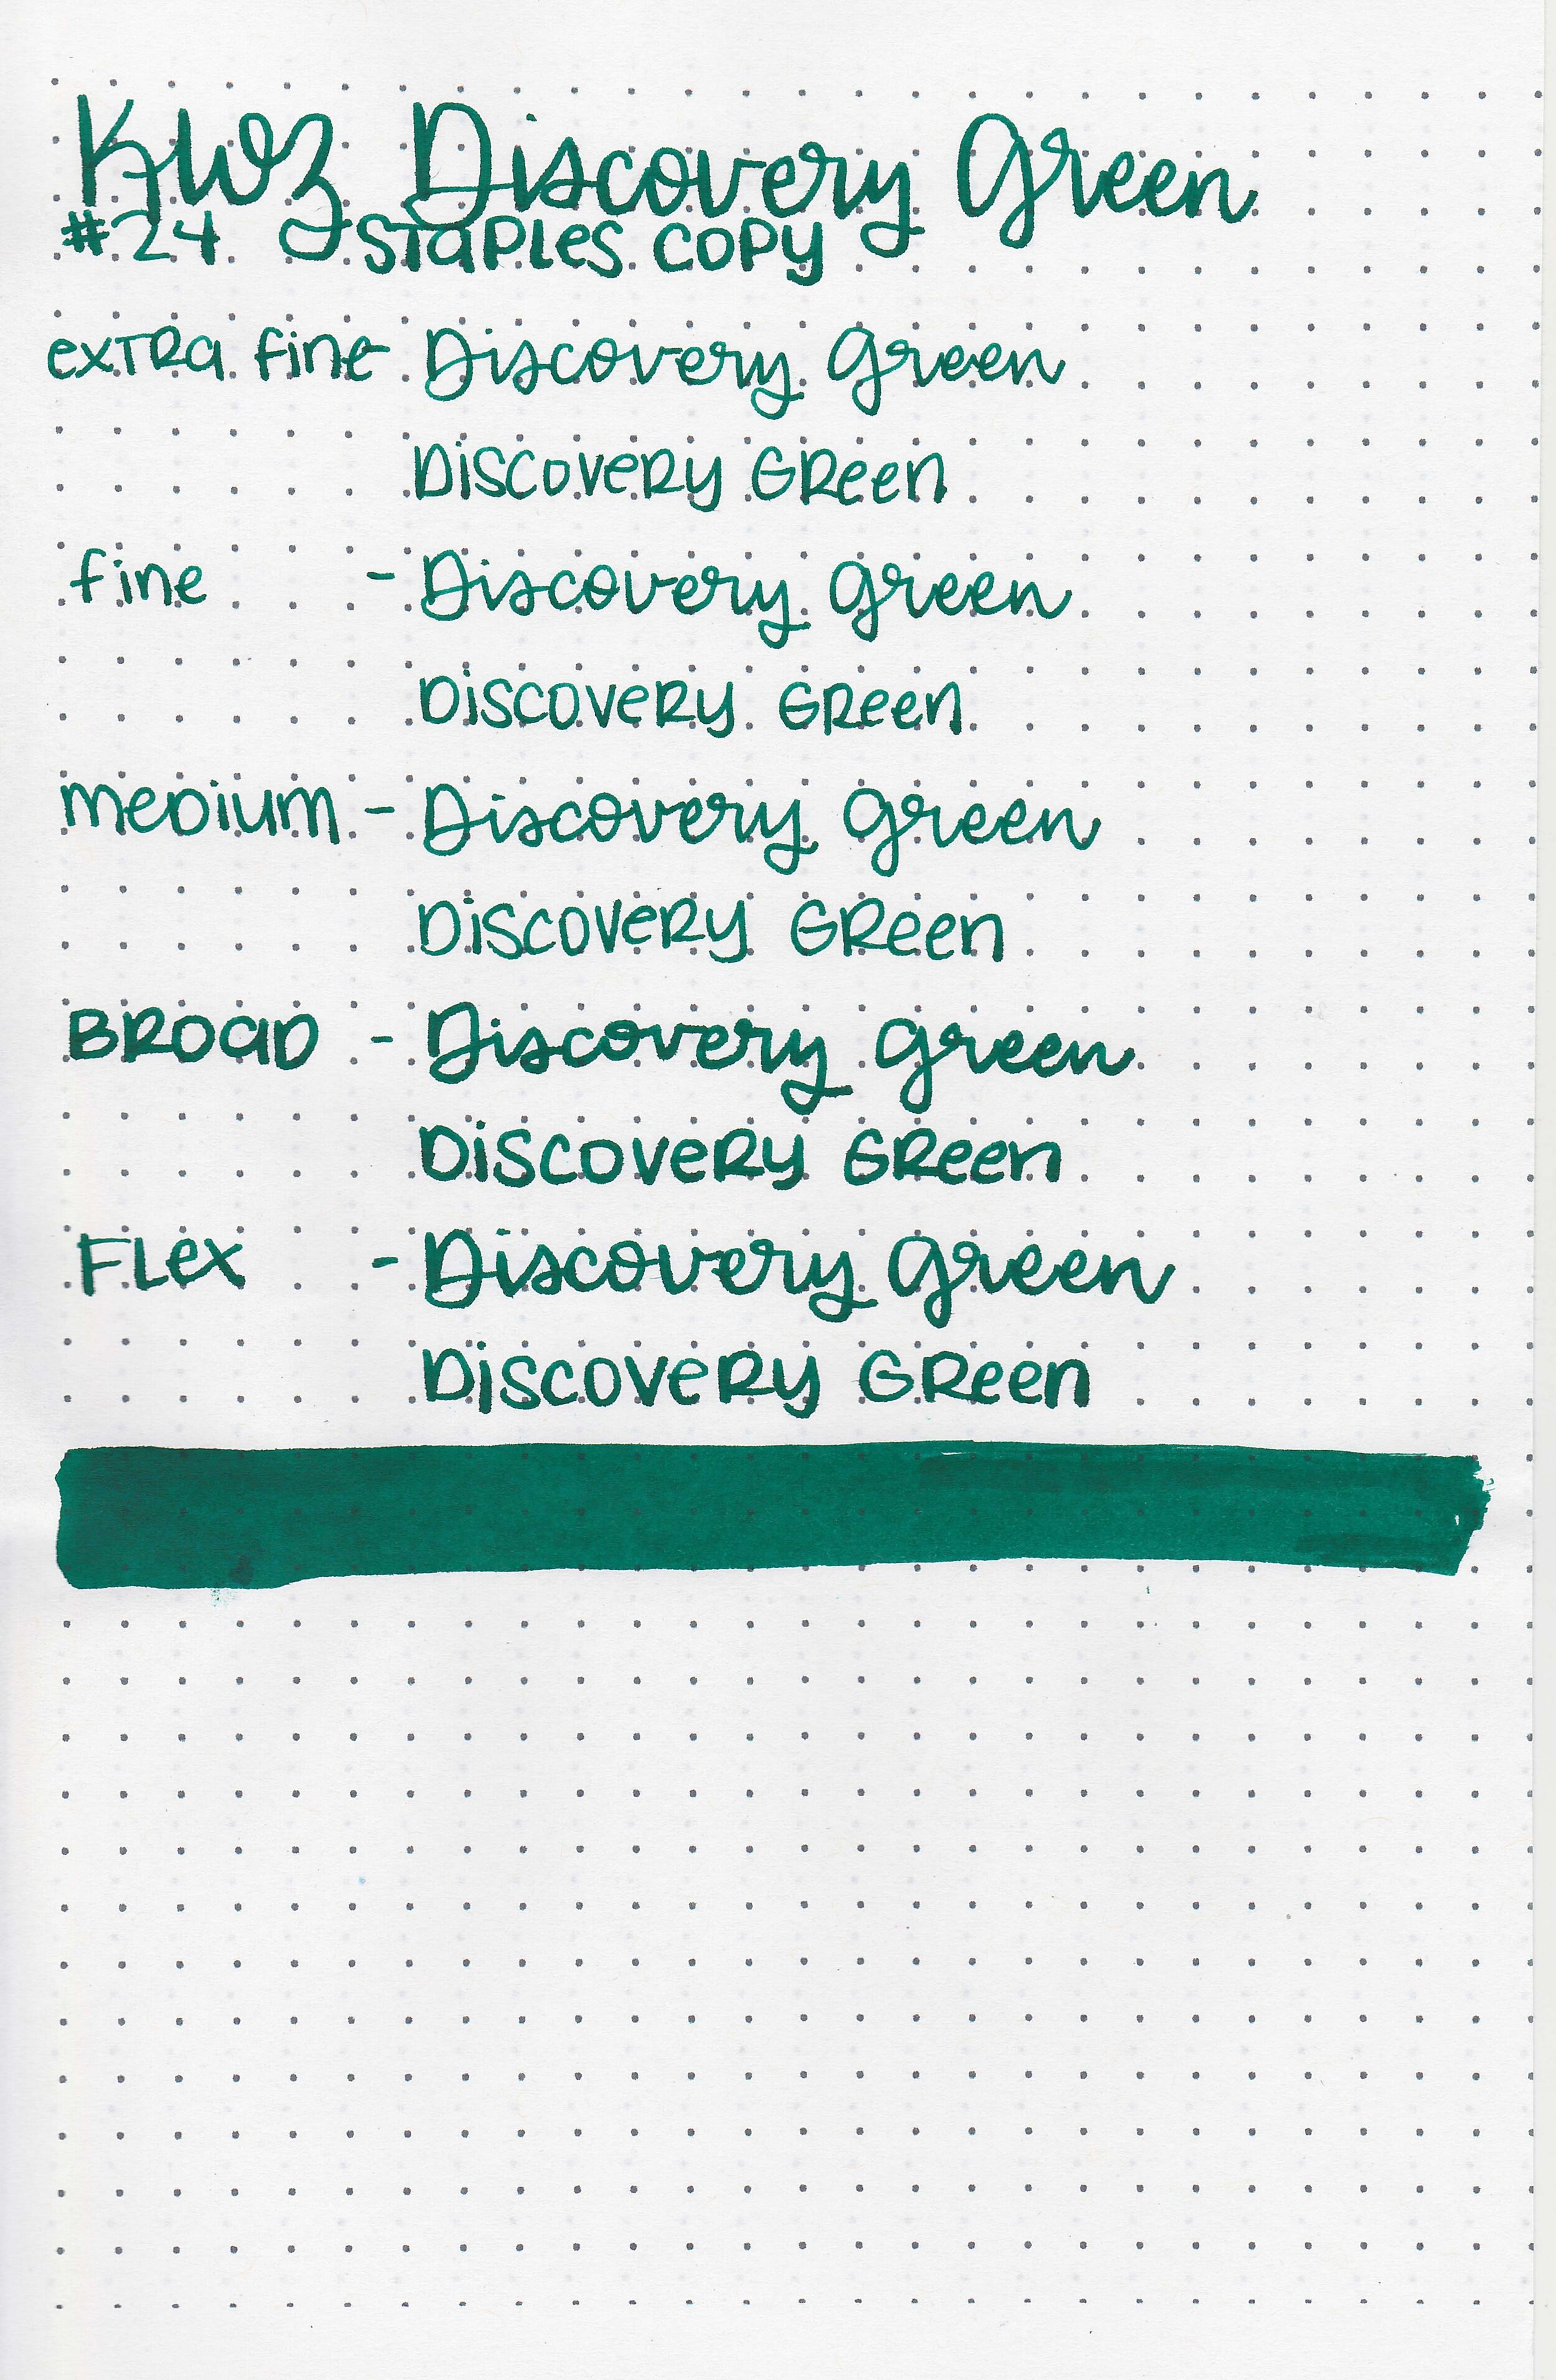 kwz-discovery-green-11.jpg